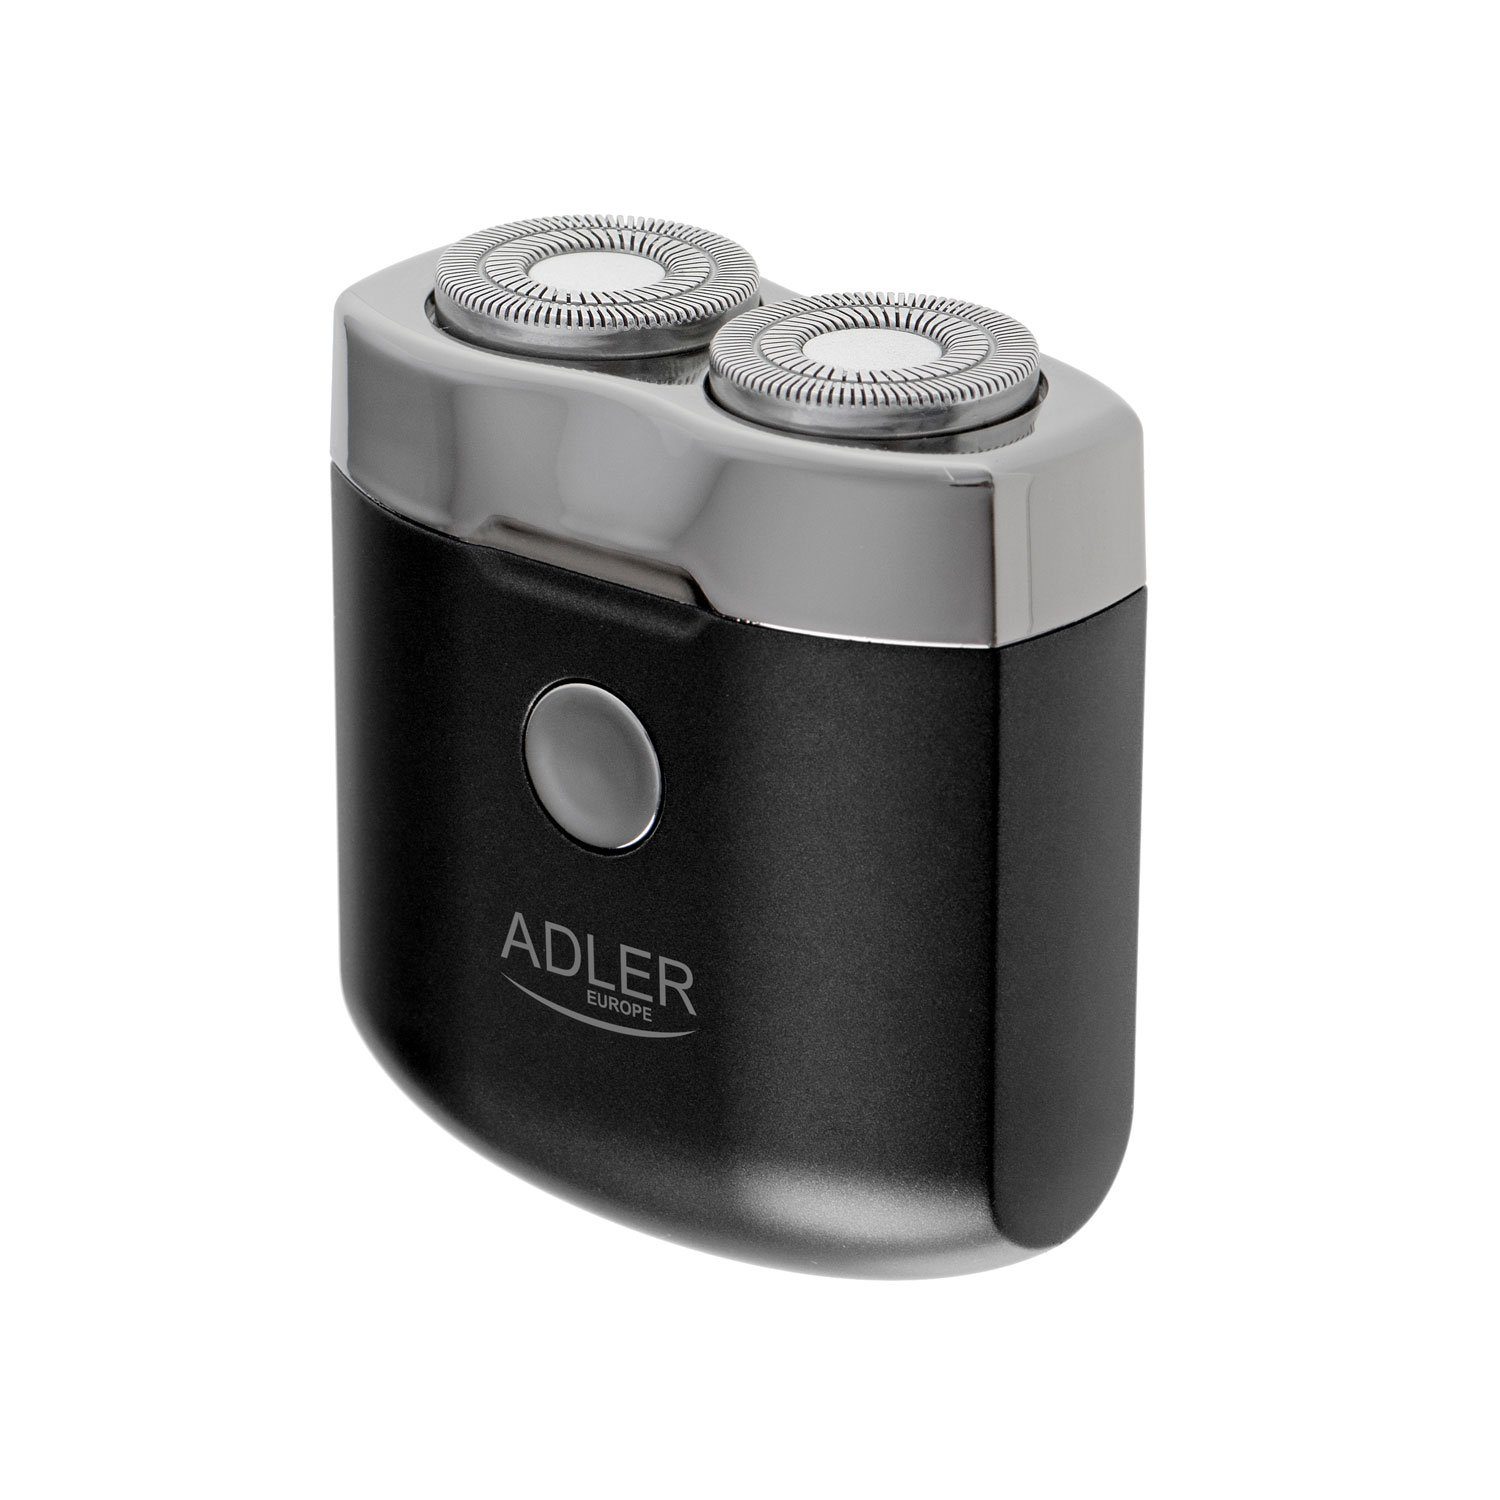 Adler Elektrorasierer AD Netzkabel, USB-C-Aufladung Kabellos mit Reiserasierer USB Reisen Akku 2936, Herrenrasierer